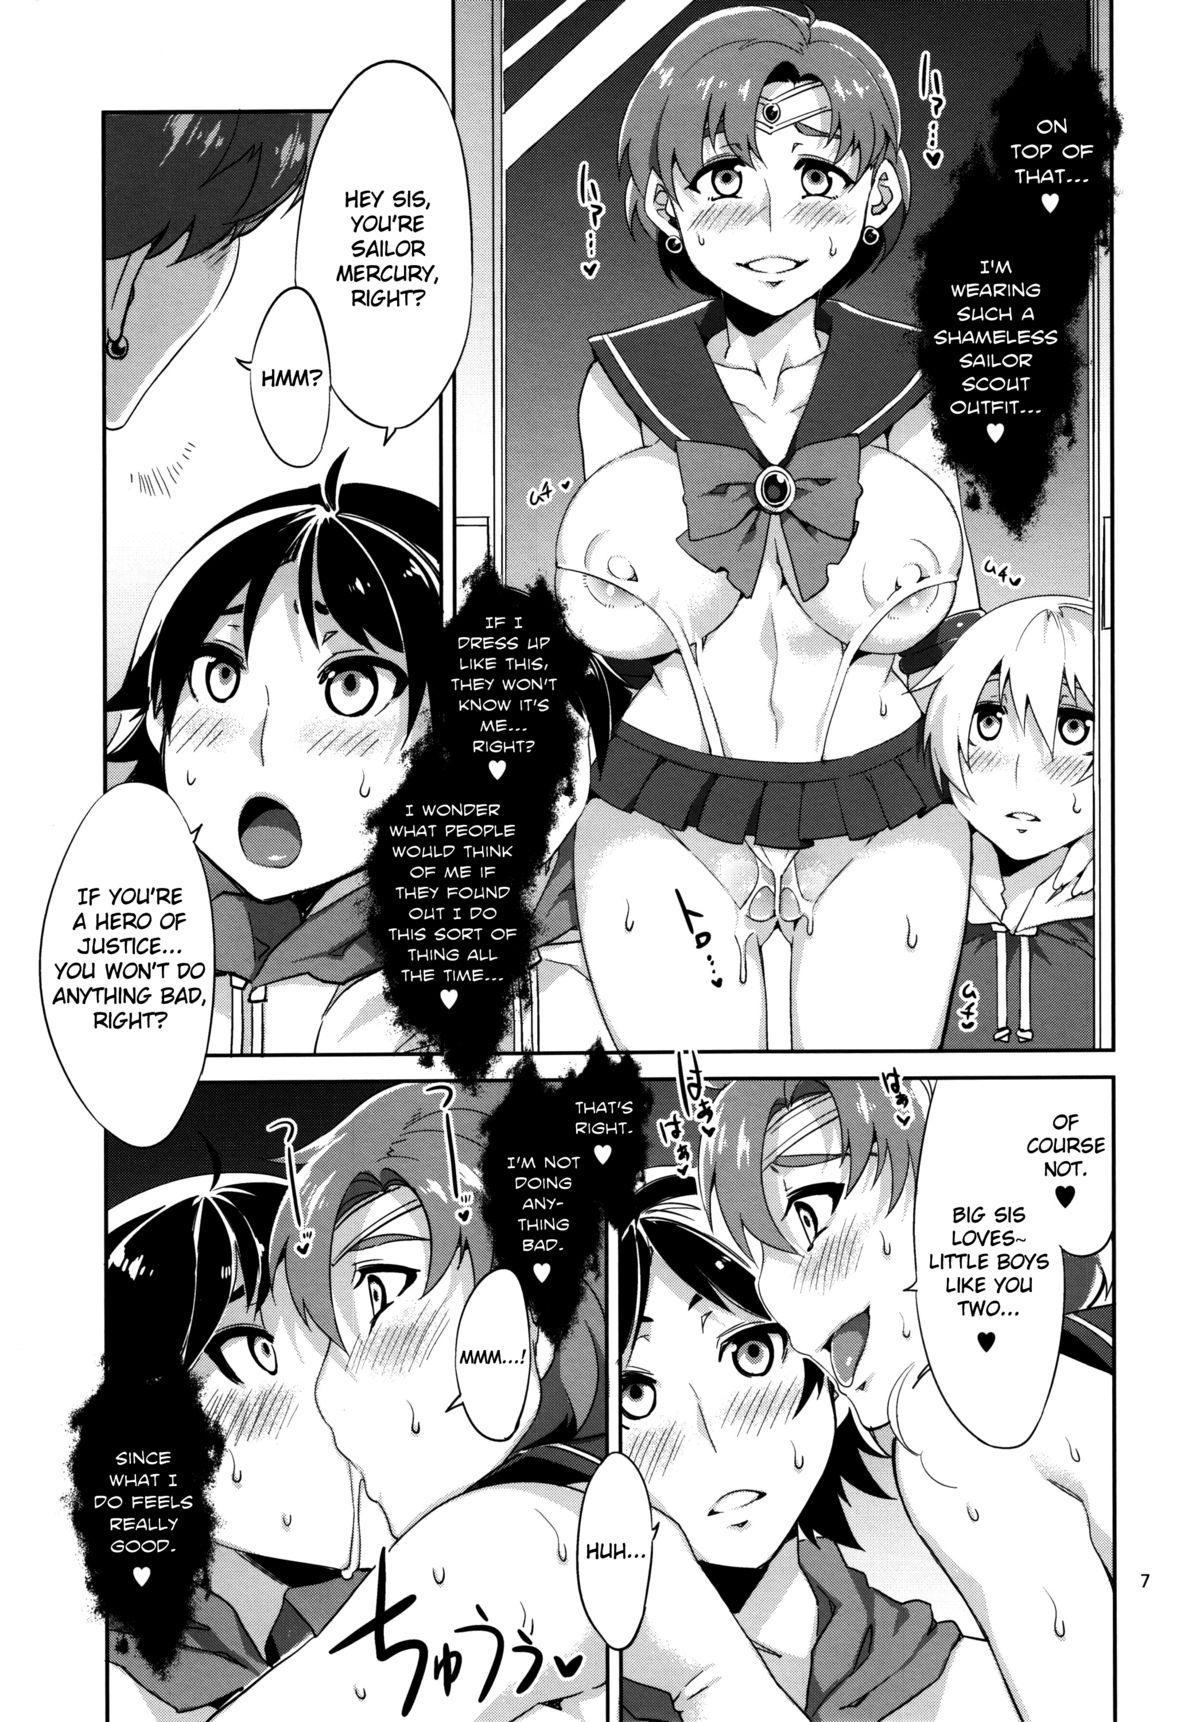 Mallu MERCURY SHADOW - Sailor moon Slut - Page 6